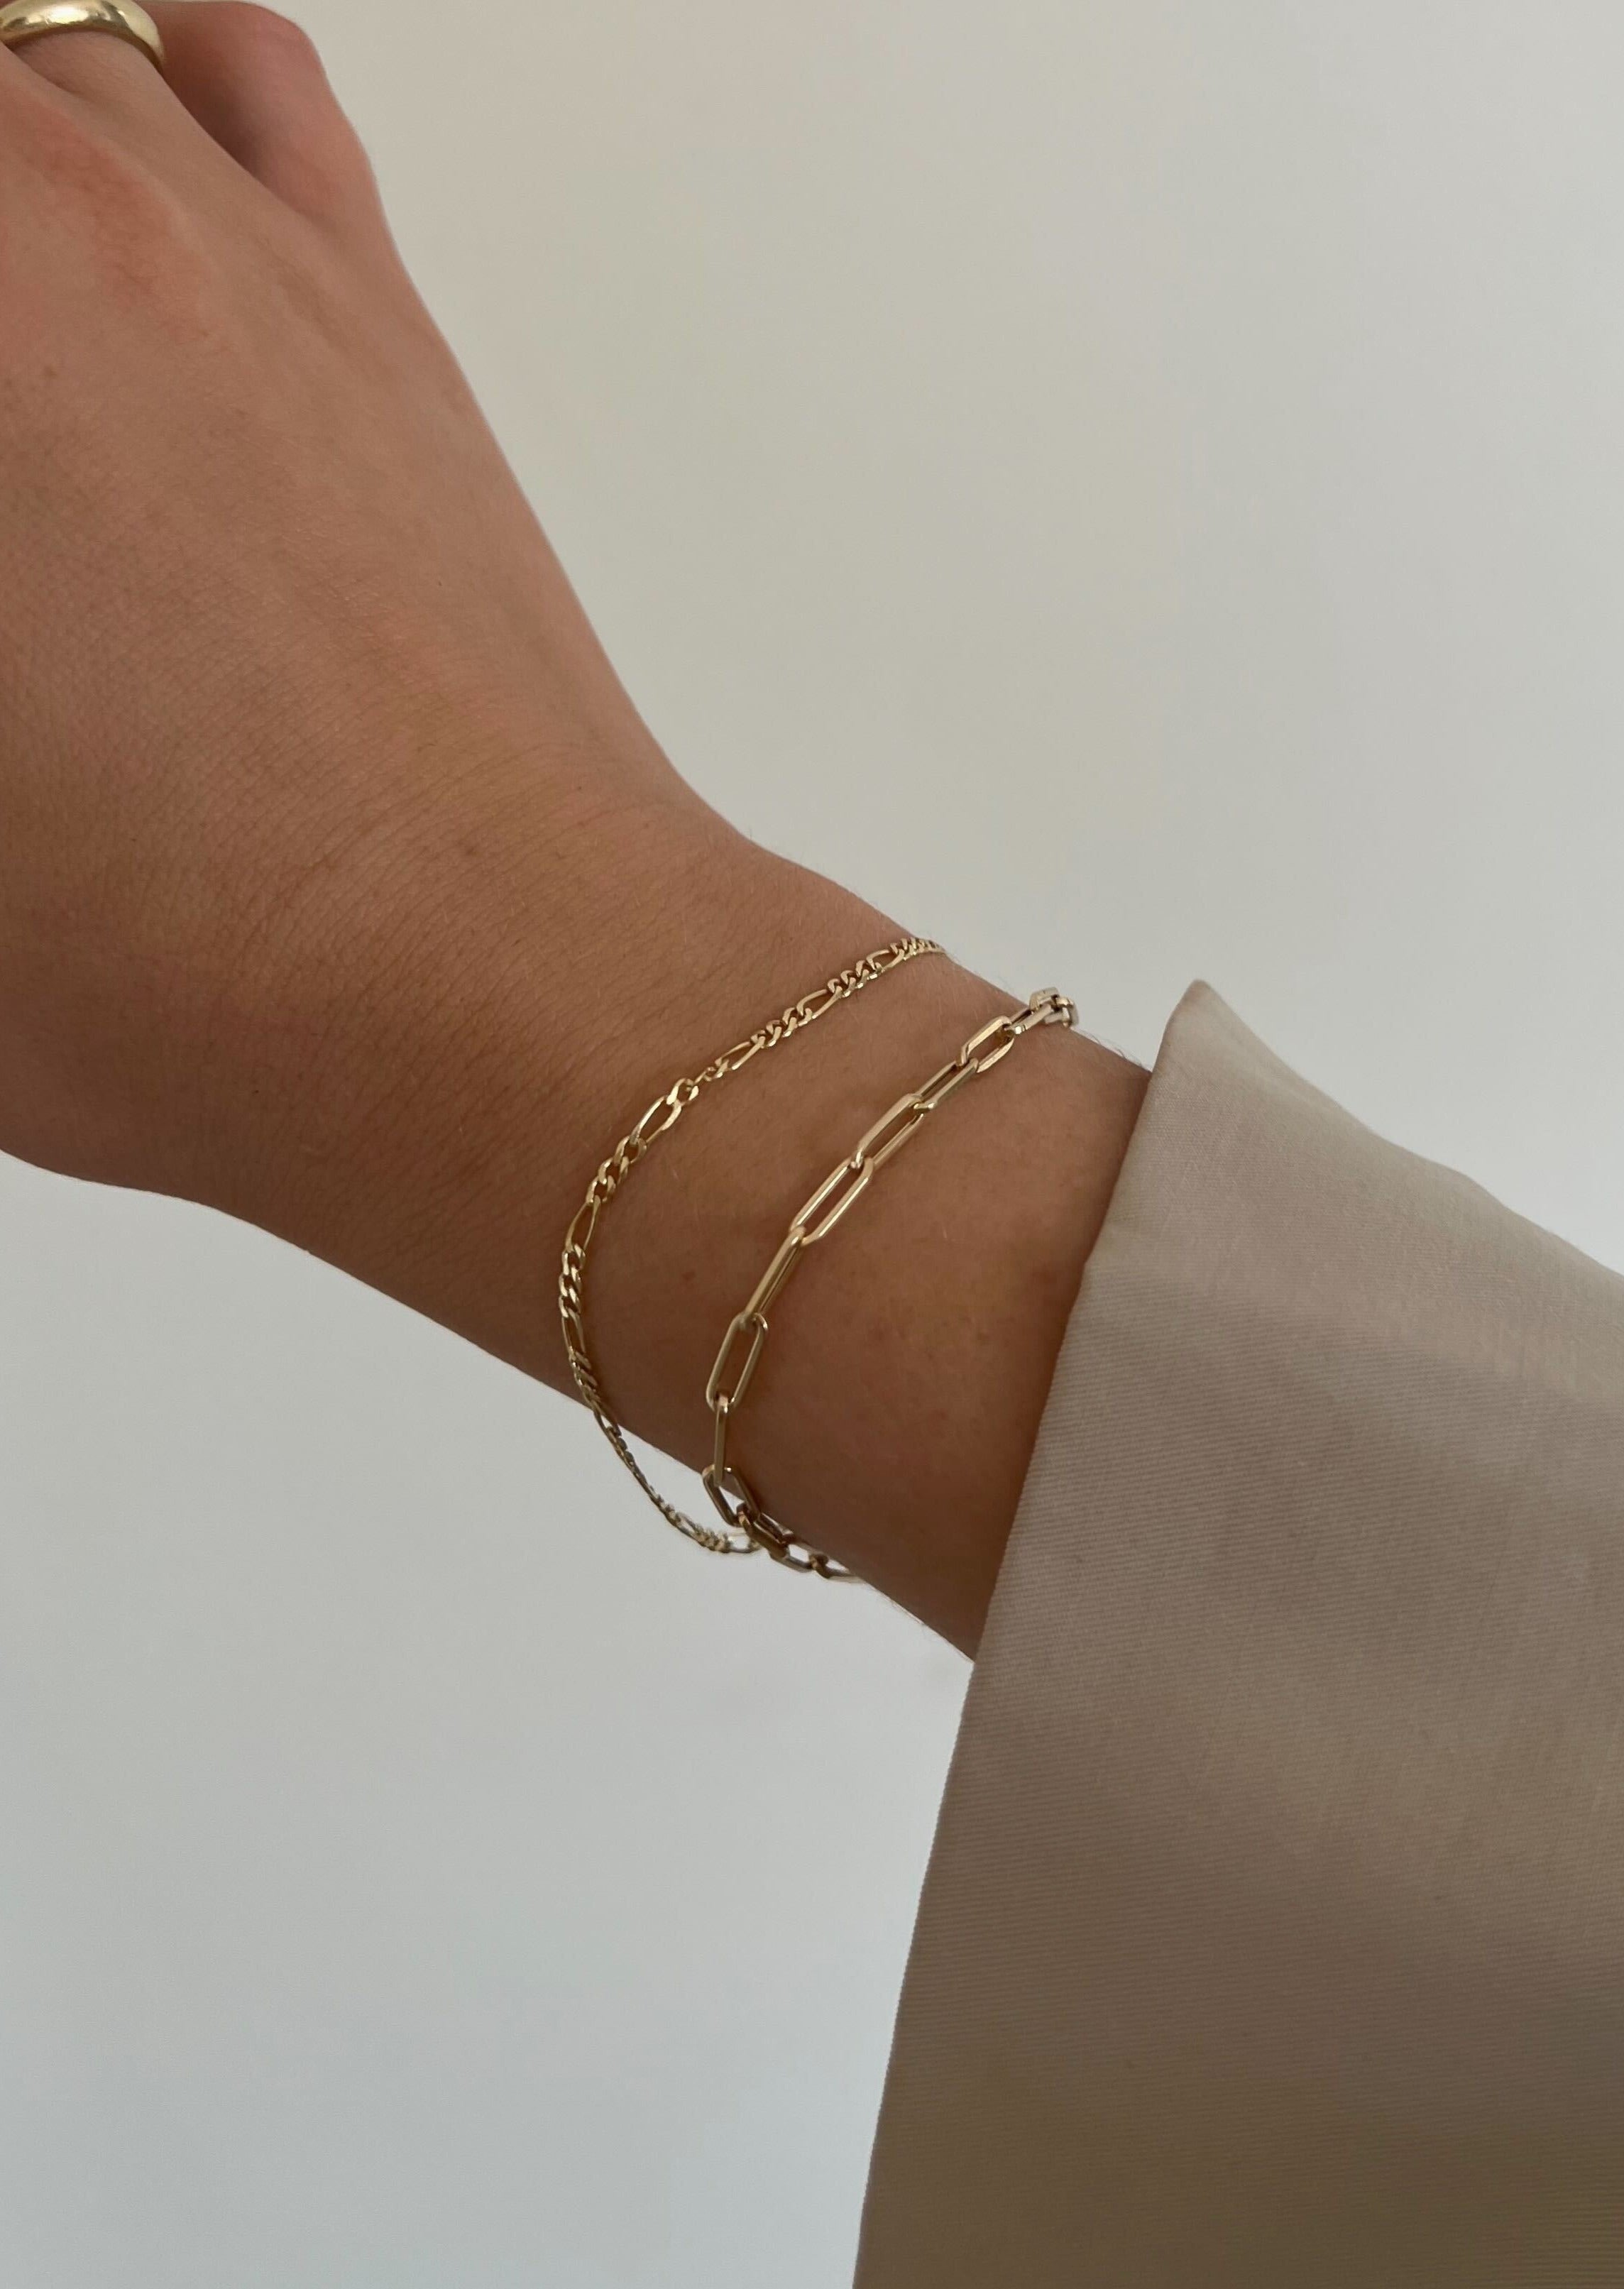 alt="Kyle Figaro Chain Bracelet with mini link bracelet"